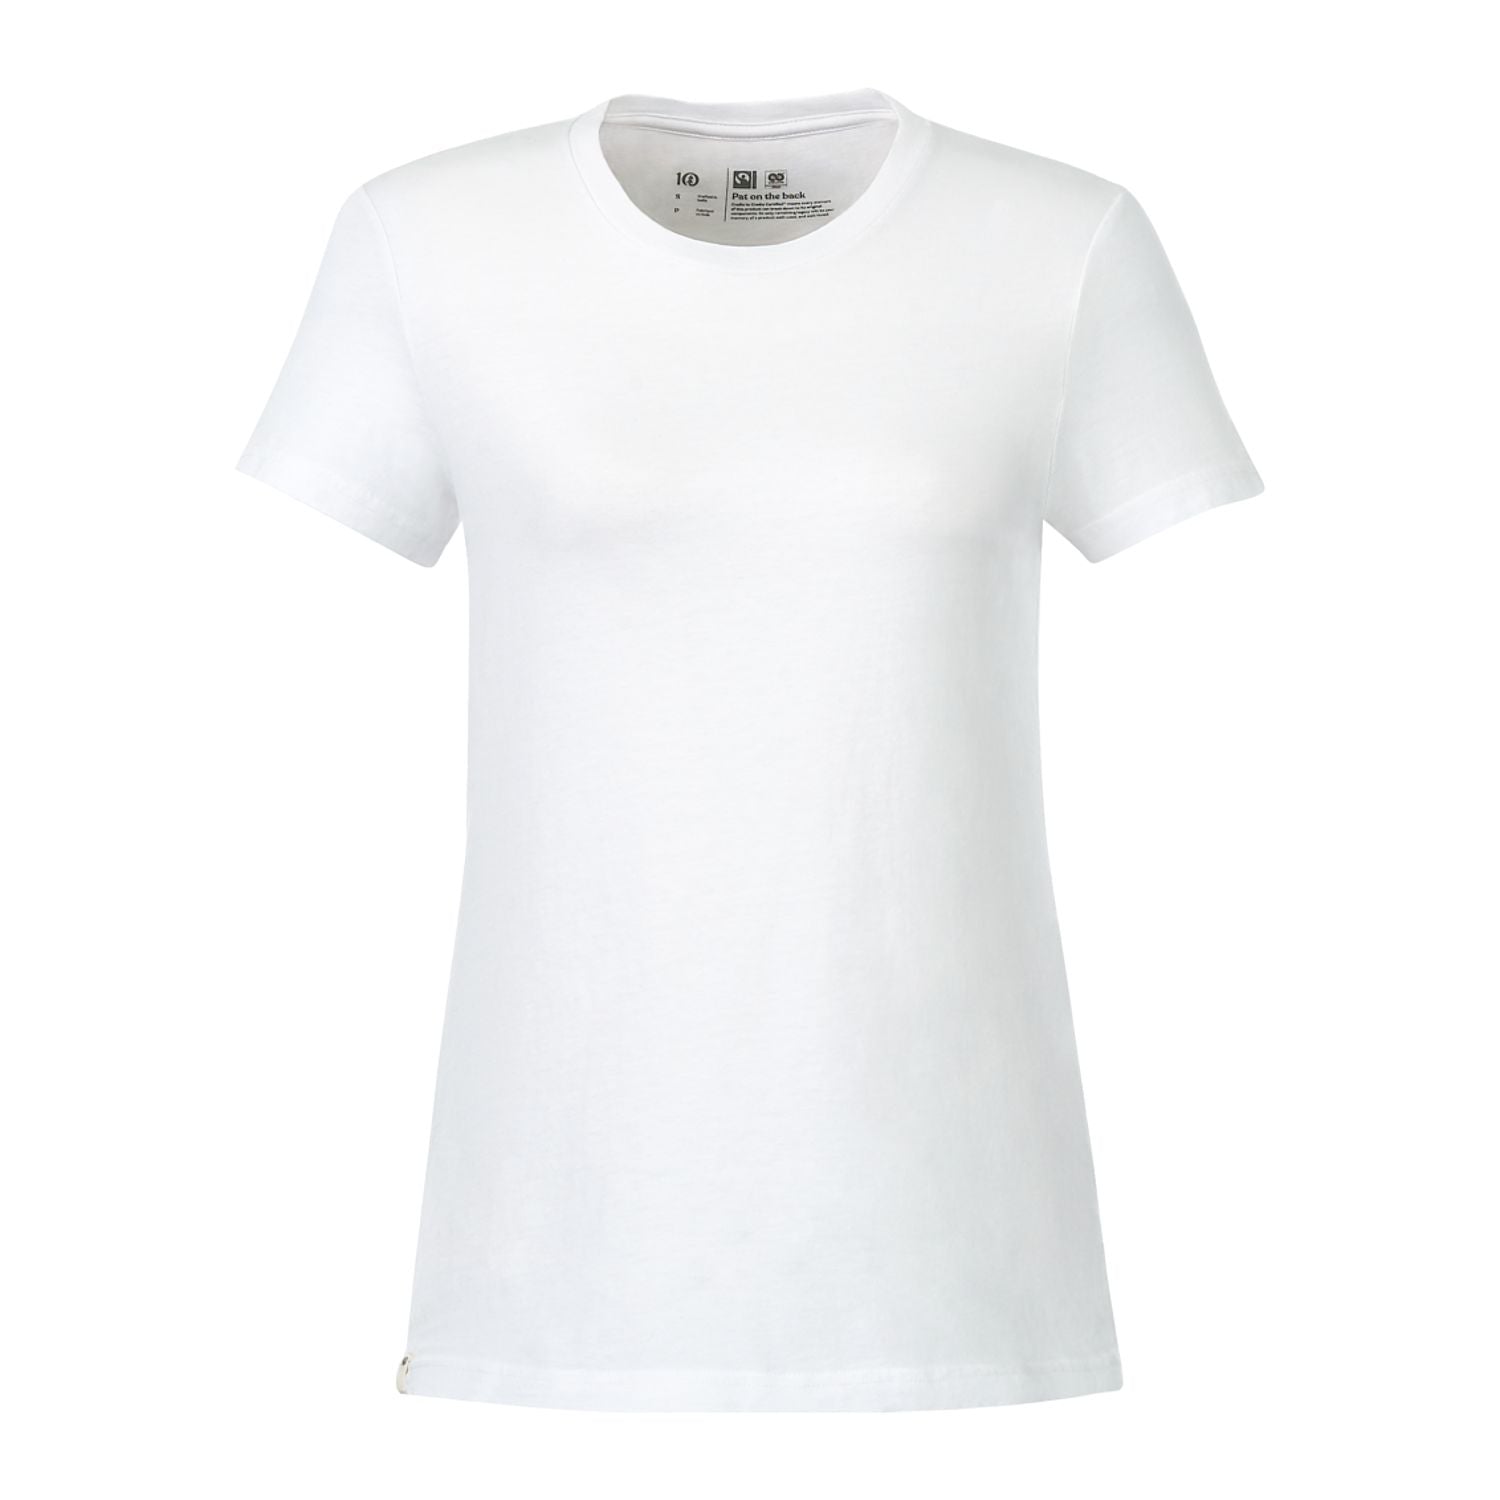 Customizable Tentree men's organic cotton short sleeve tee in white.